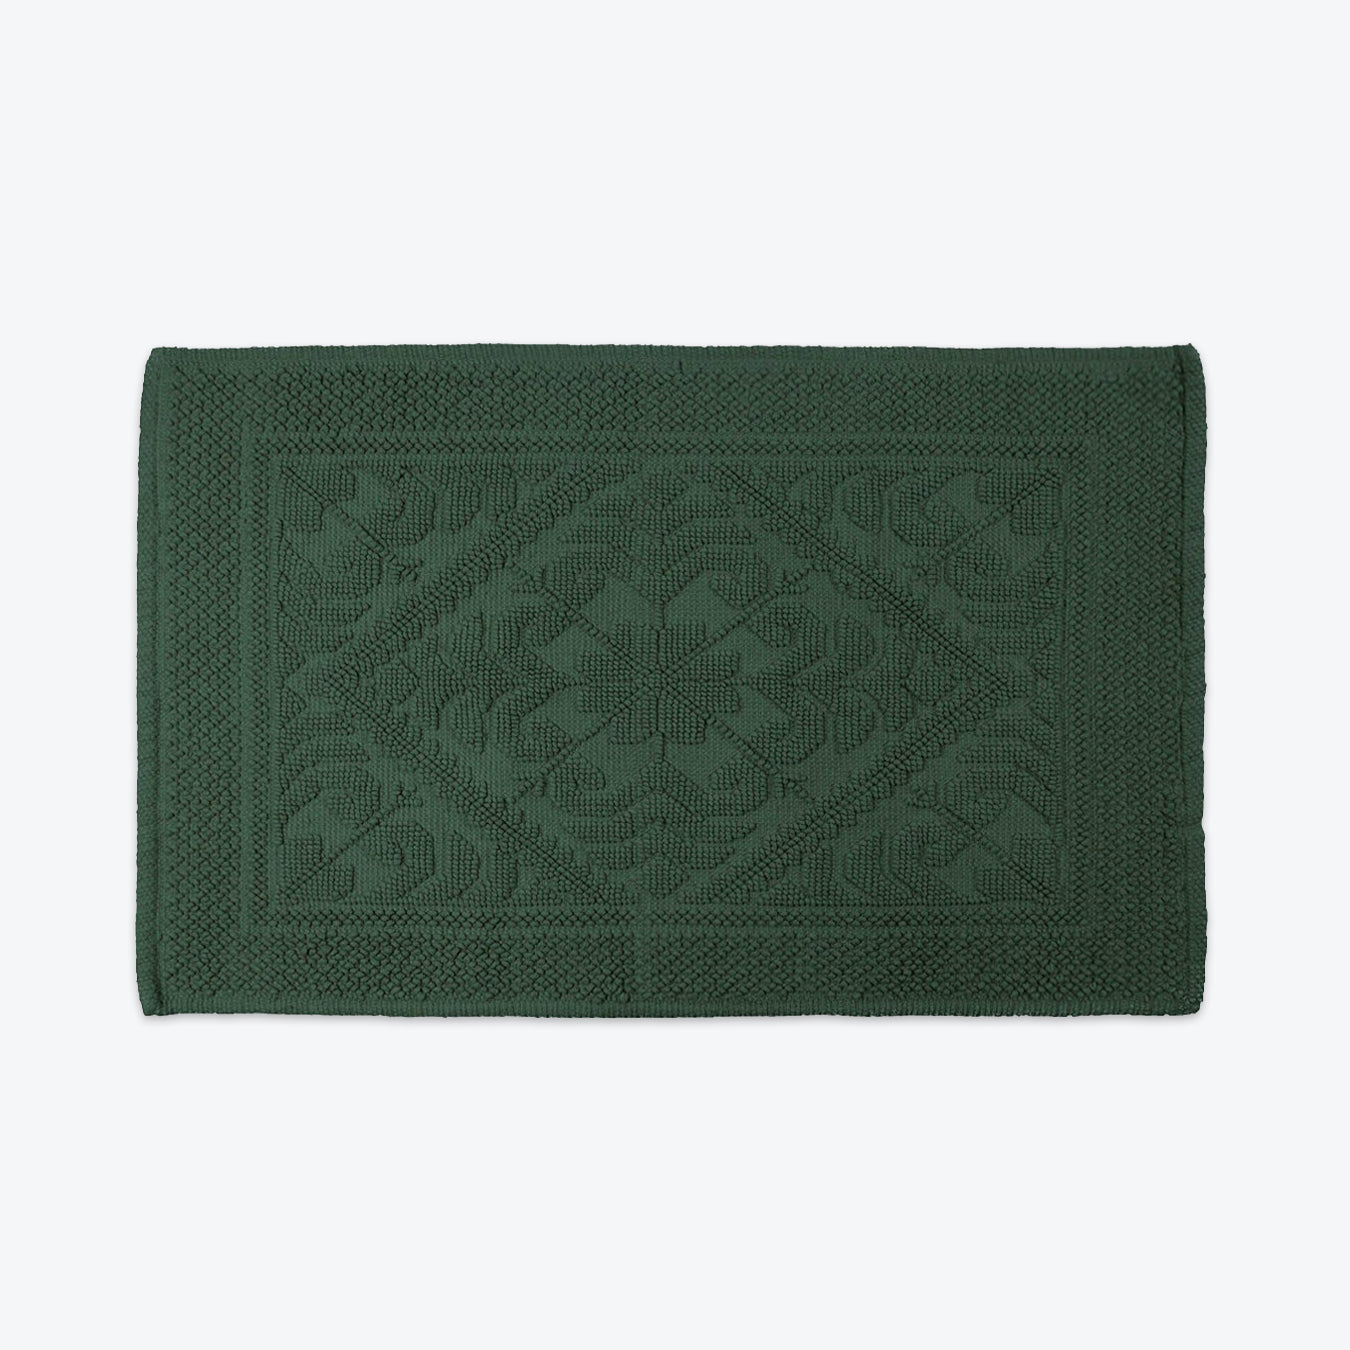 Dark Green Country House Bath Mat - Textured Cotton Rug